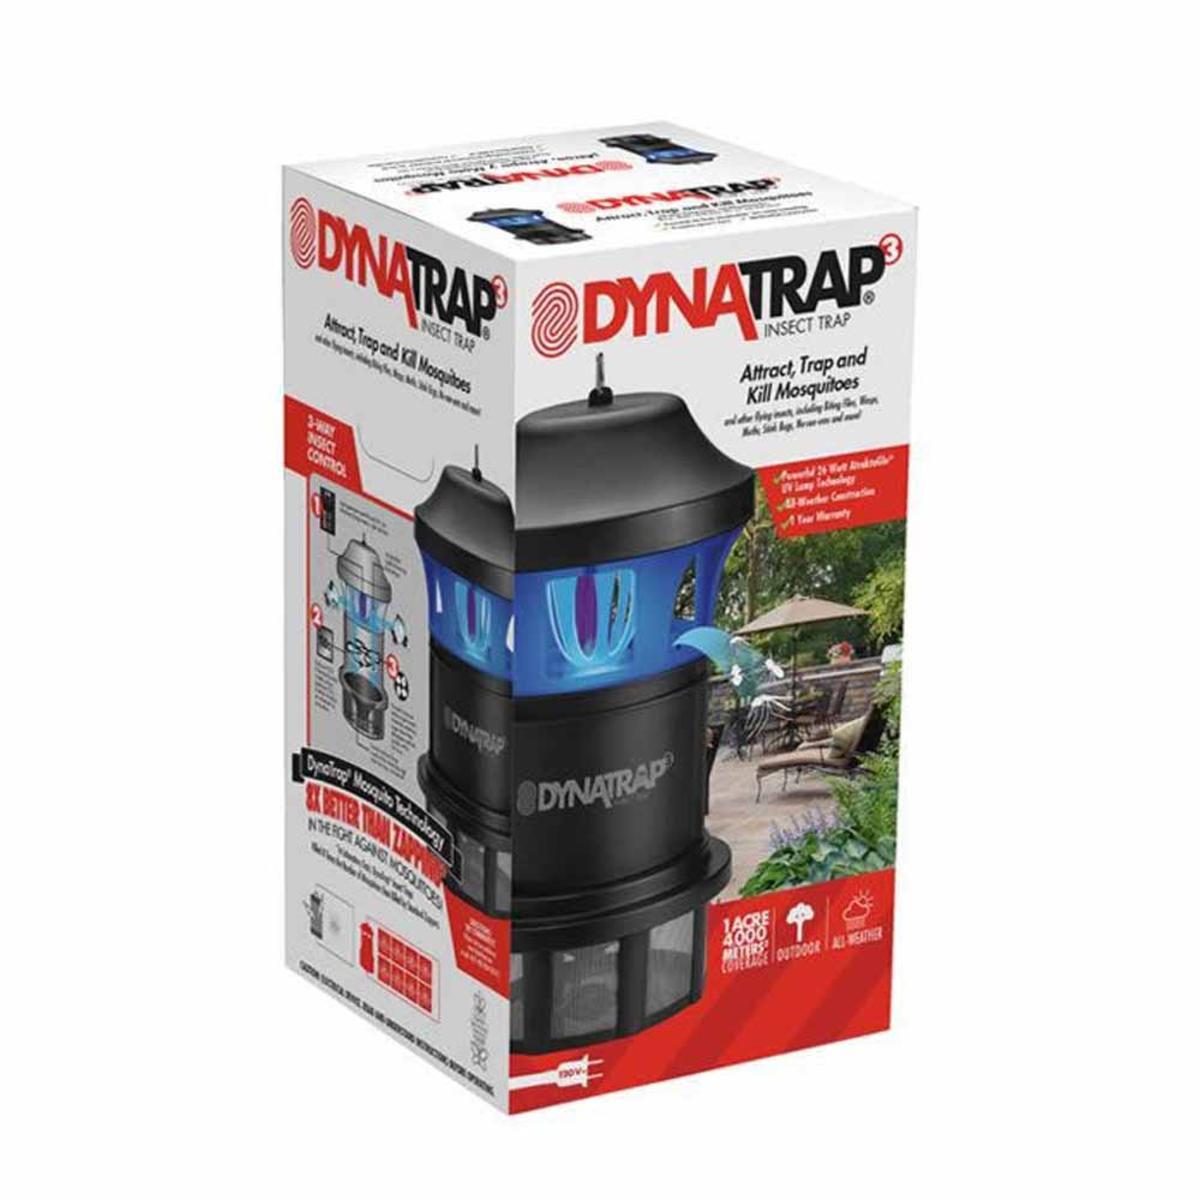 DynaTrap 1 Acre Mosquito & Insect Trap with AtraktaGlo Light - Black